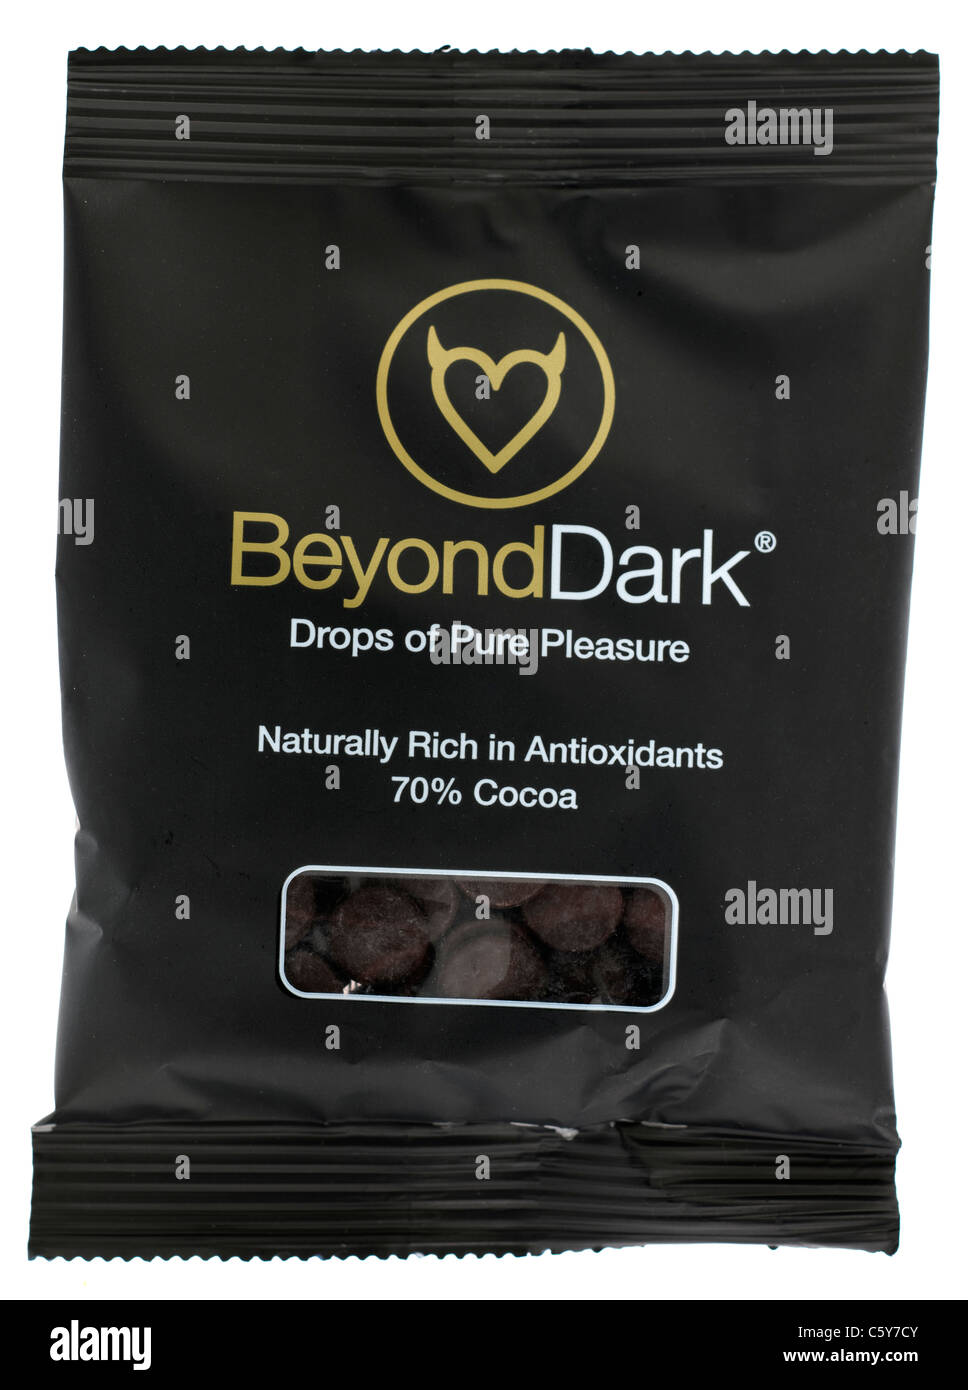 Bag of Beyond Dark chocolate drops. Stock Photo